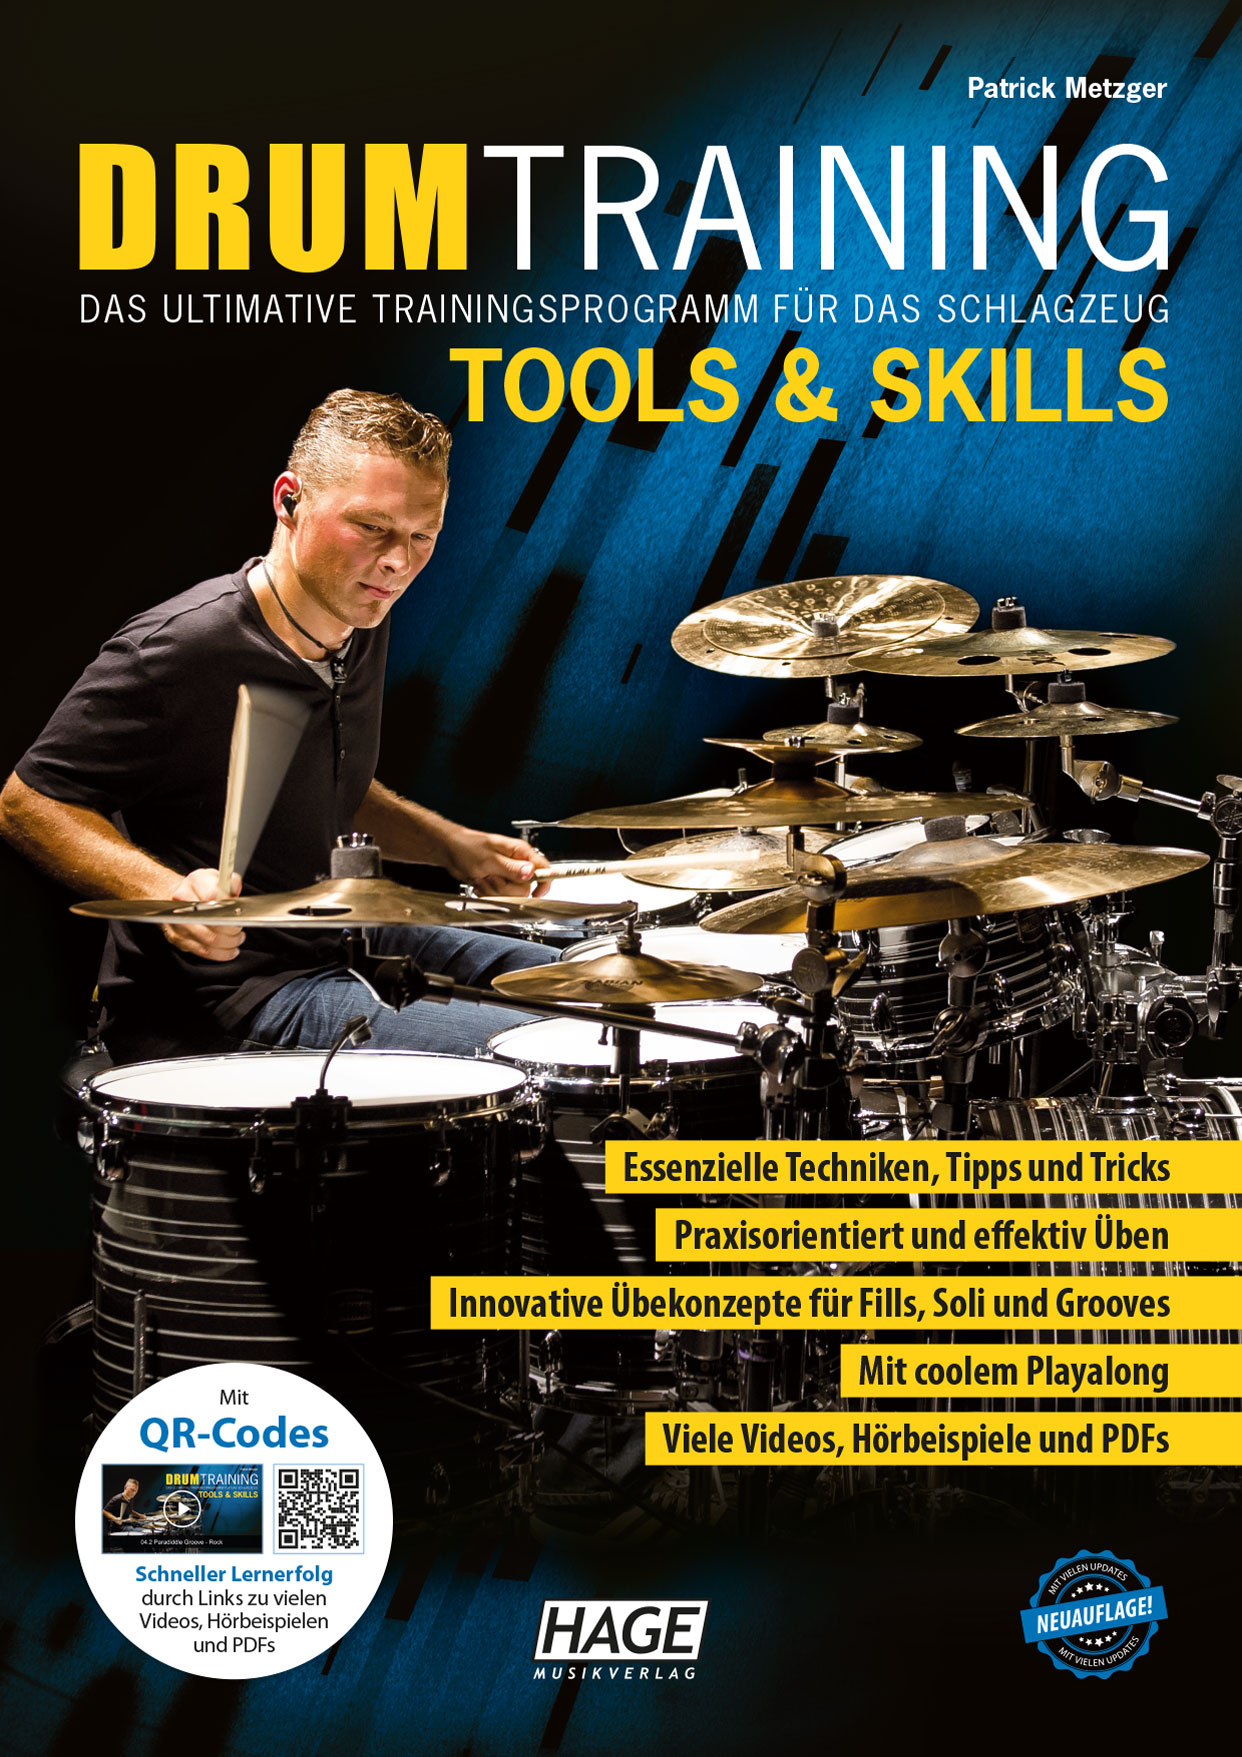 Drum Training Tools & Skills (with QR-Codes)